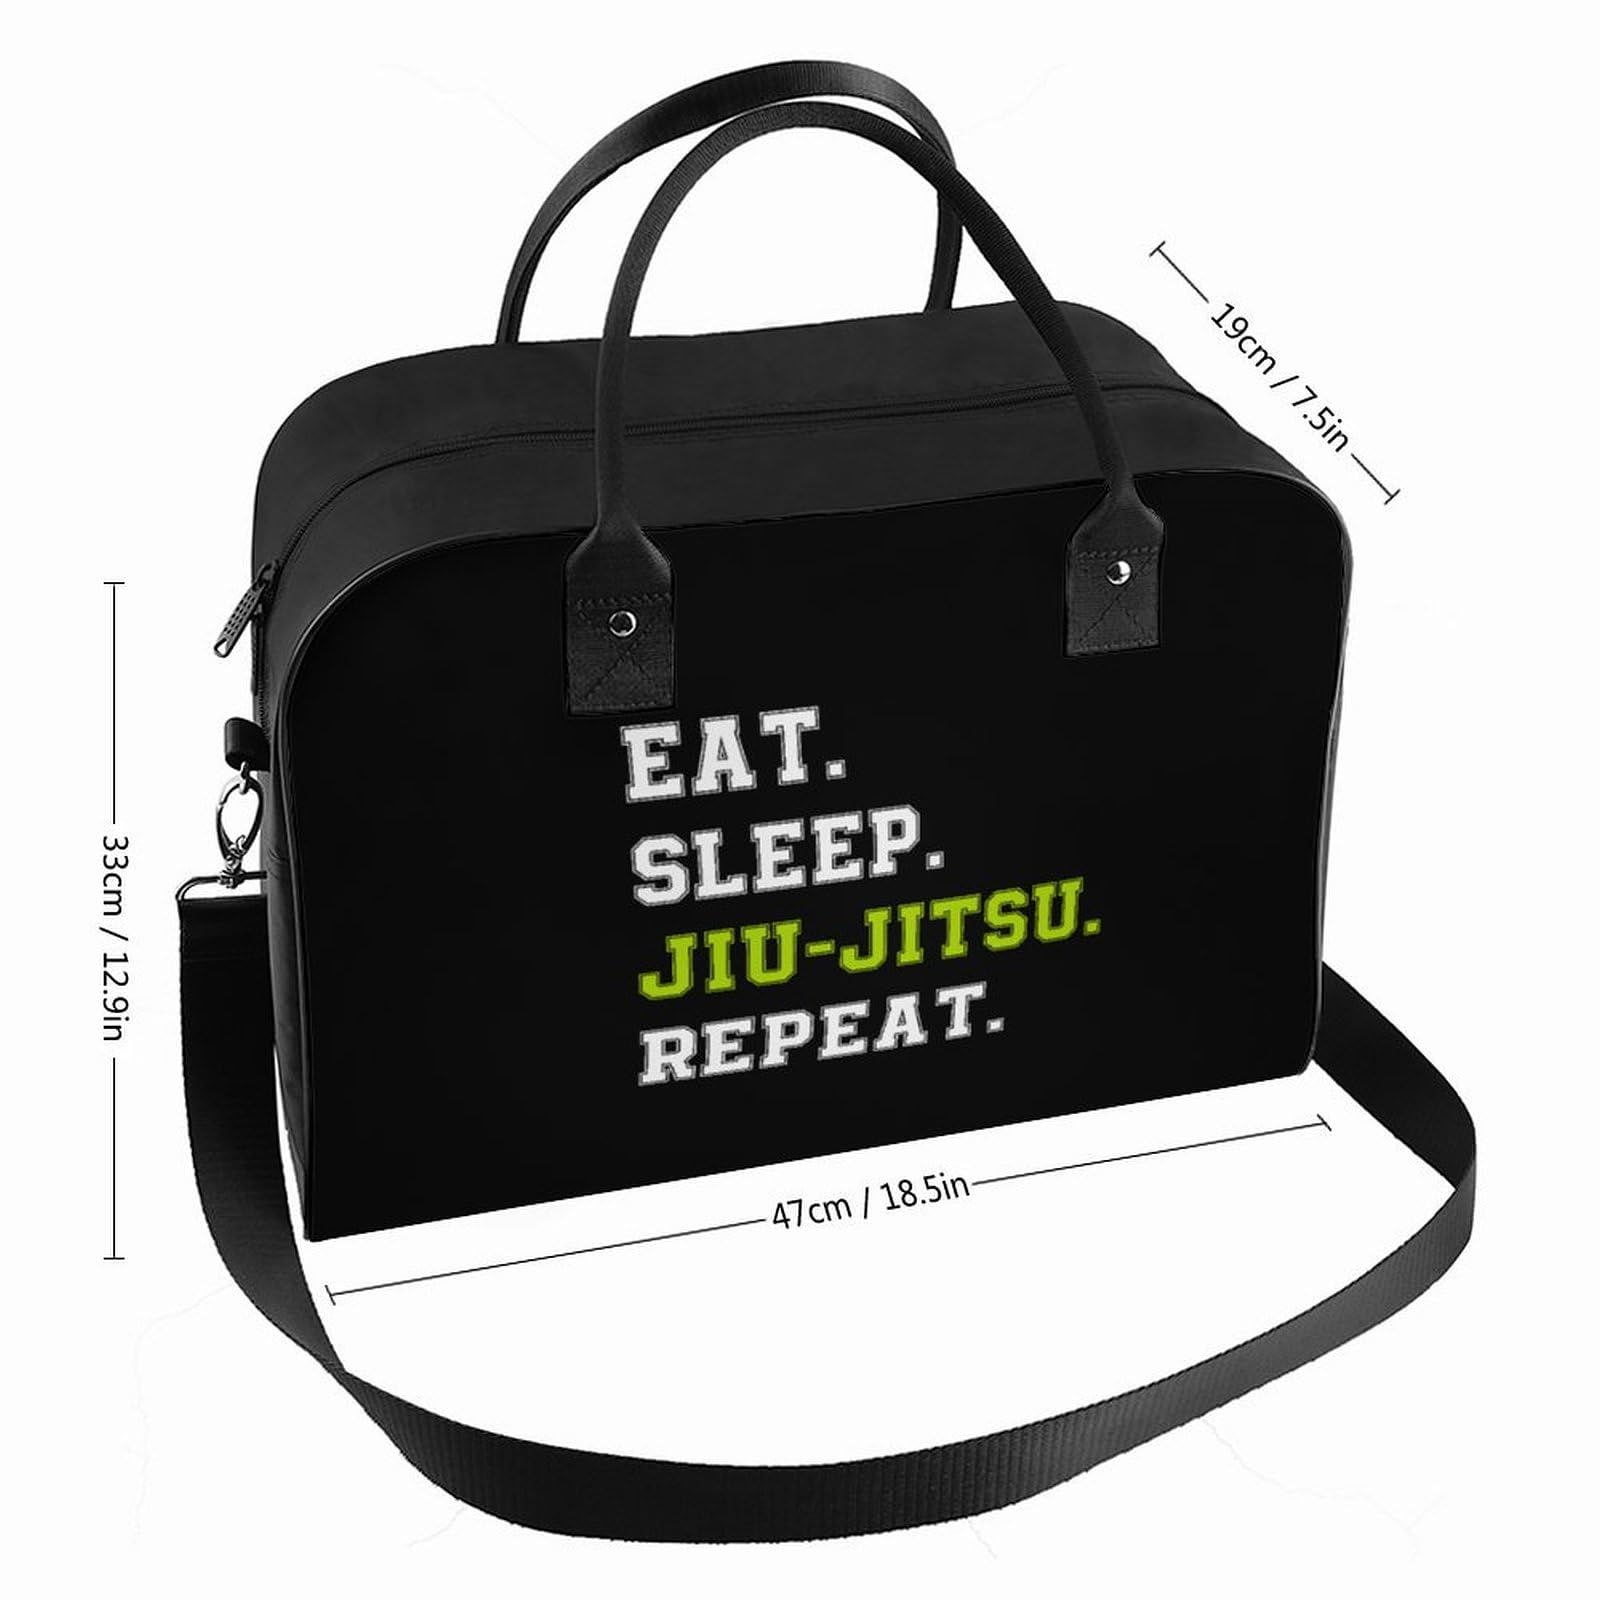 Eat Sleep Jiu-Jitsu Repeat Large Crossbody Bag Laptop Bags Shoulder Handbags Tote with Strap for Travel Office